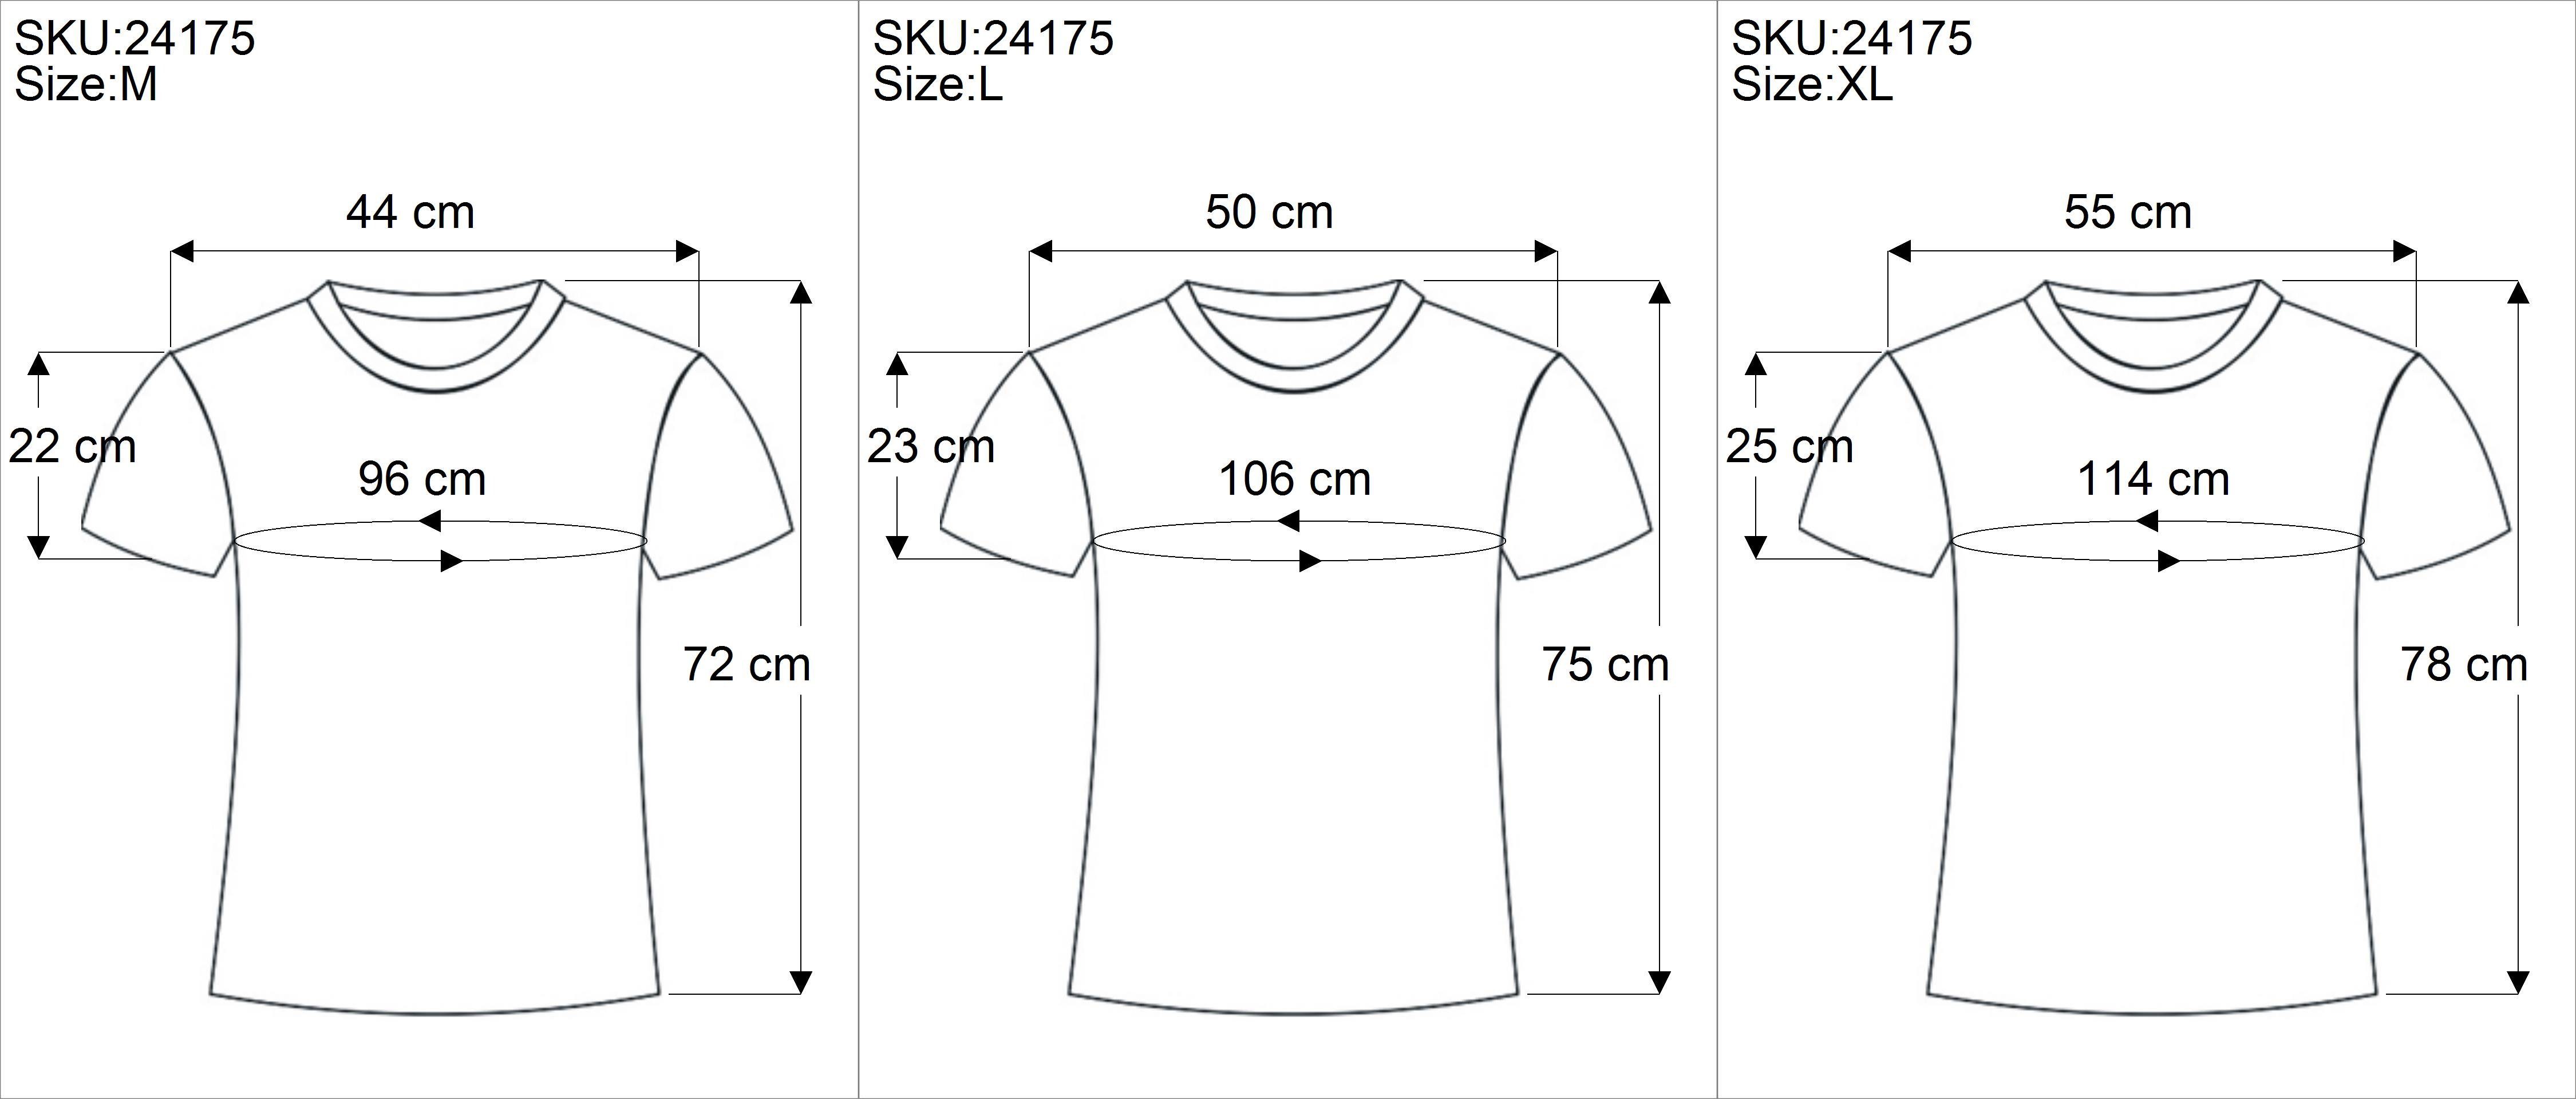 Guru-Shop T-Shirt Retro Abflug alternative T-Shirt Fun Art - Bekleidung